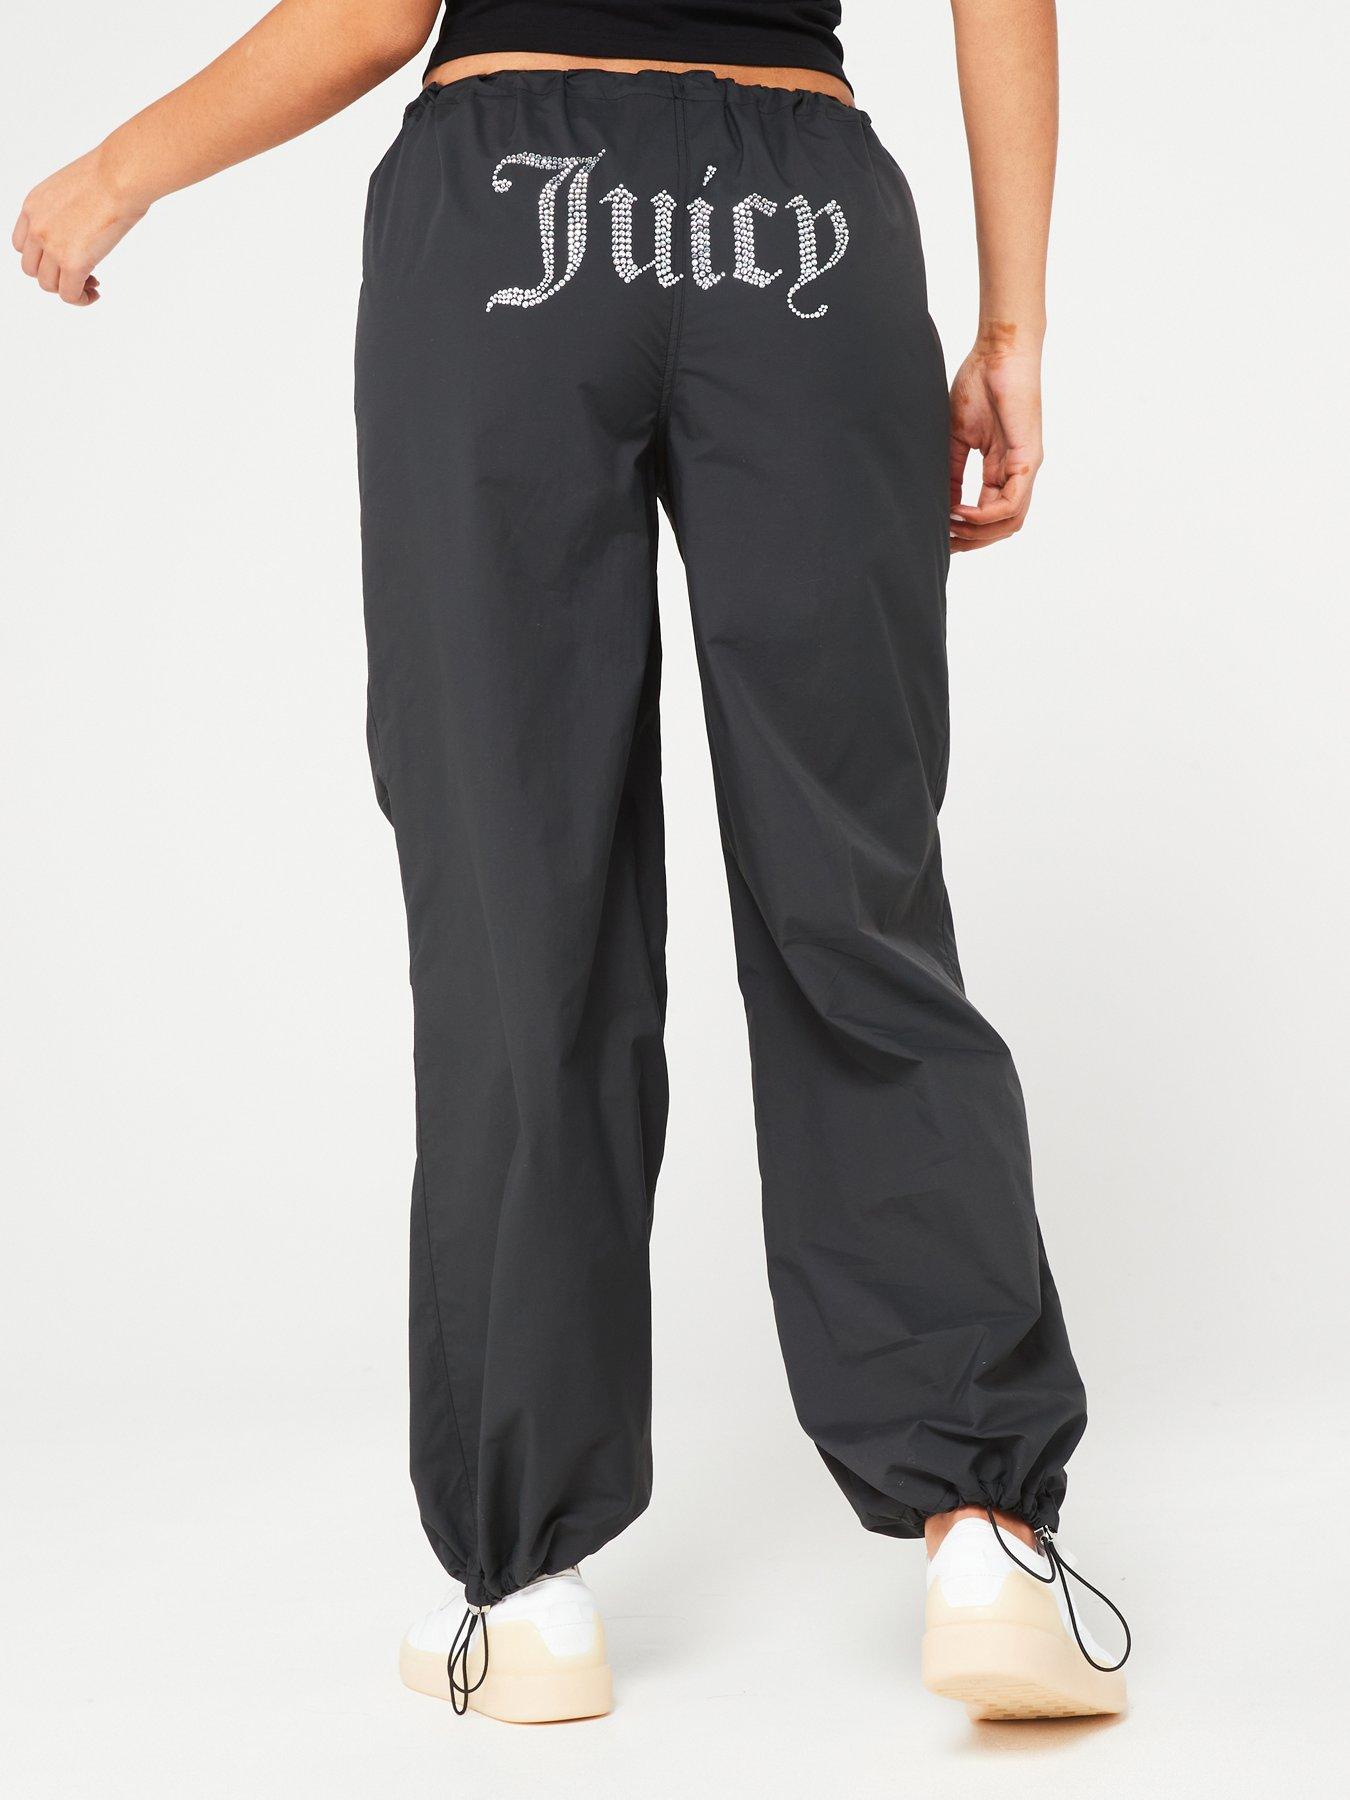 Juicy Couture Women's Logo Pro Legging, Juicy Black, X-Large